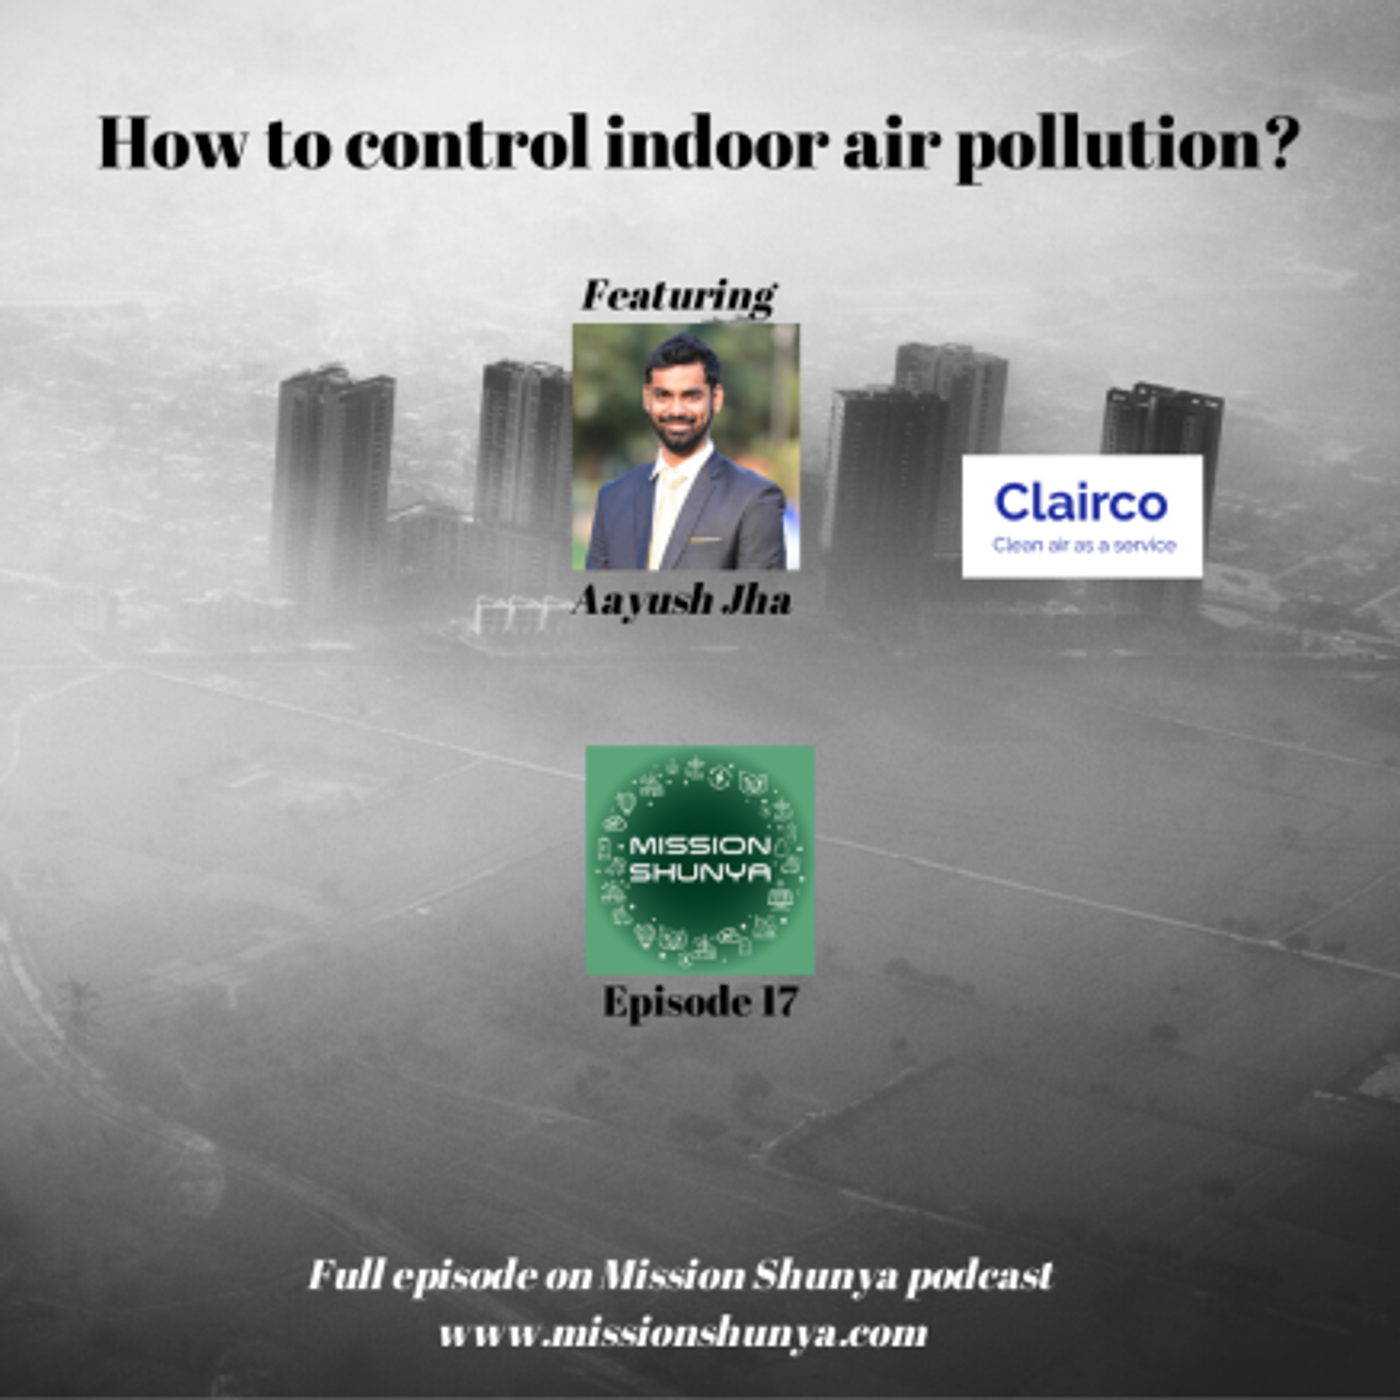 17: Clean air as a service to control indoor air pollution